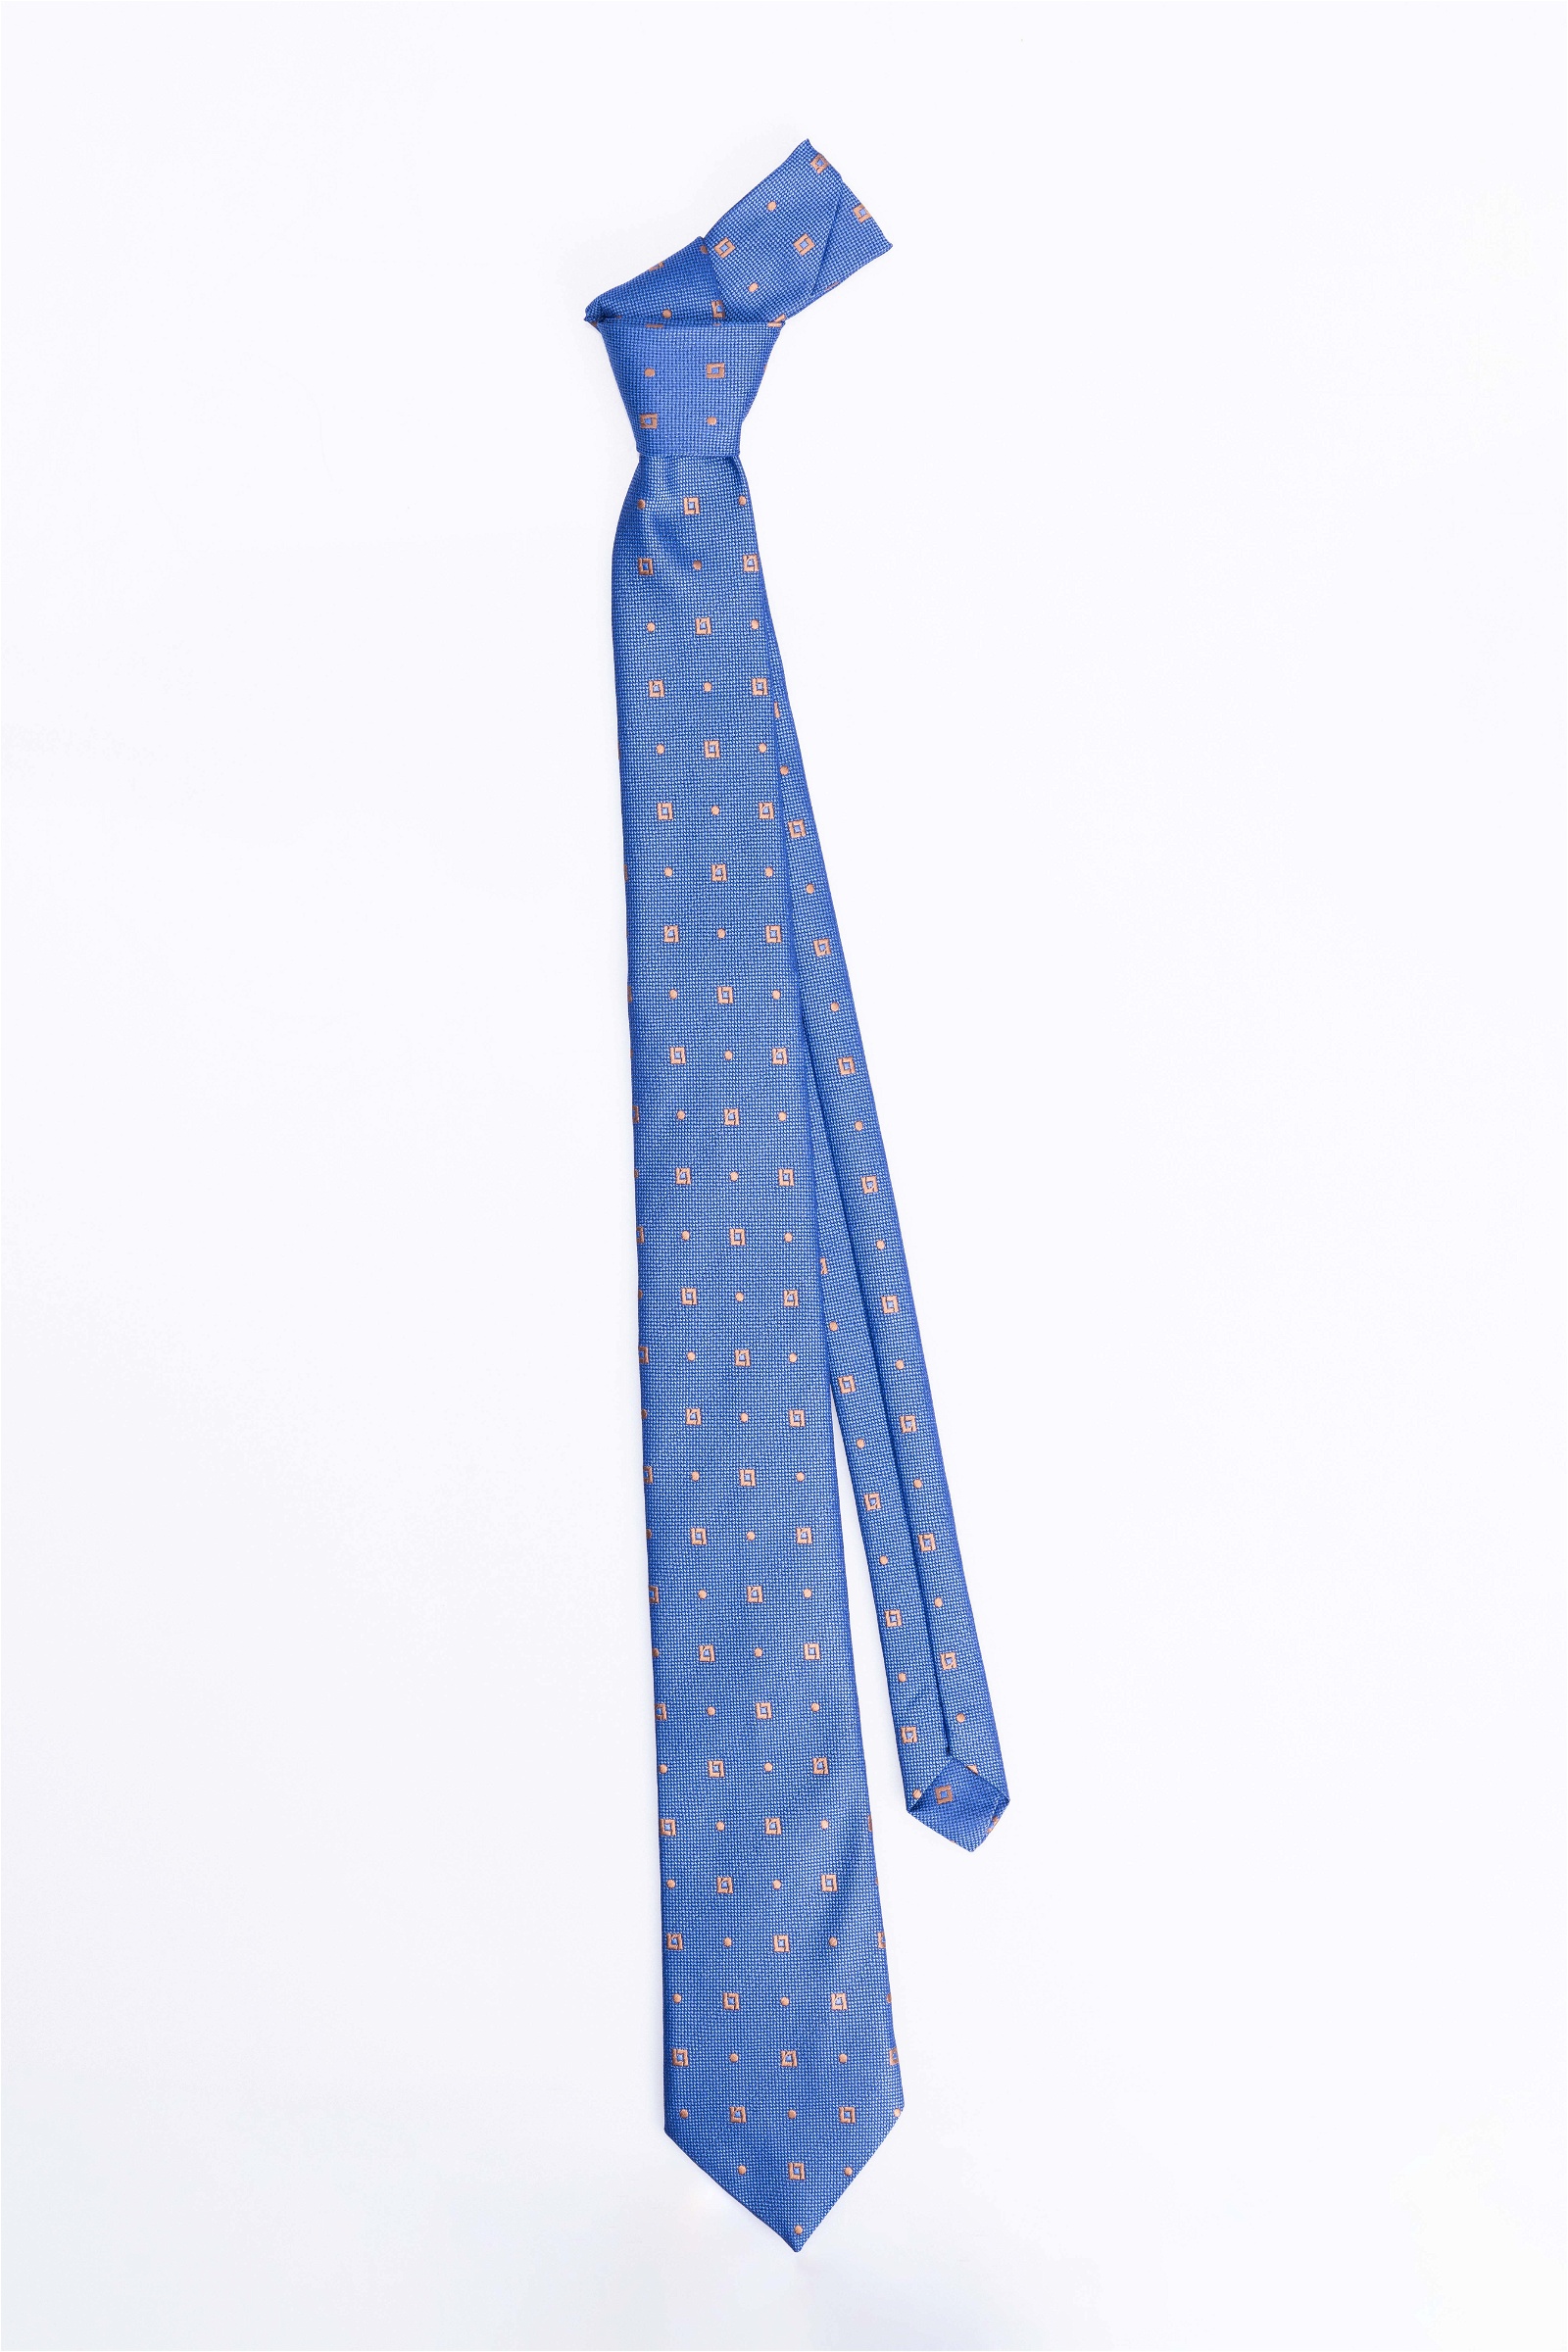  синий галстук